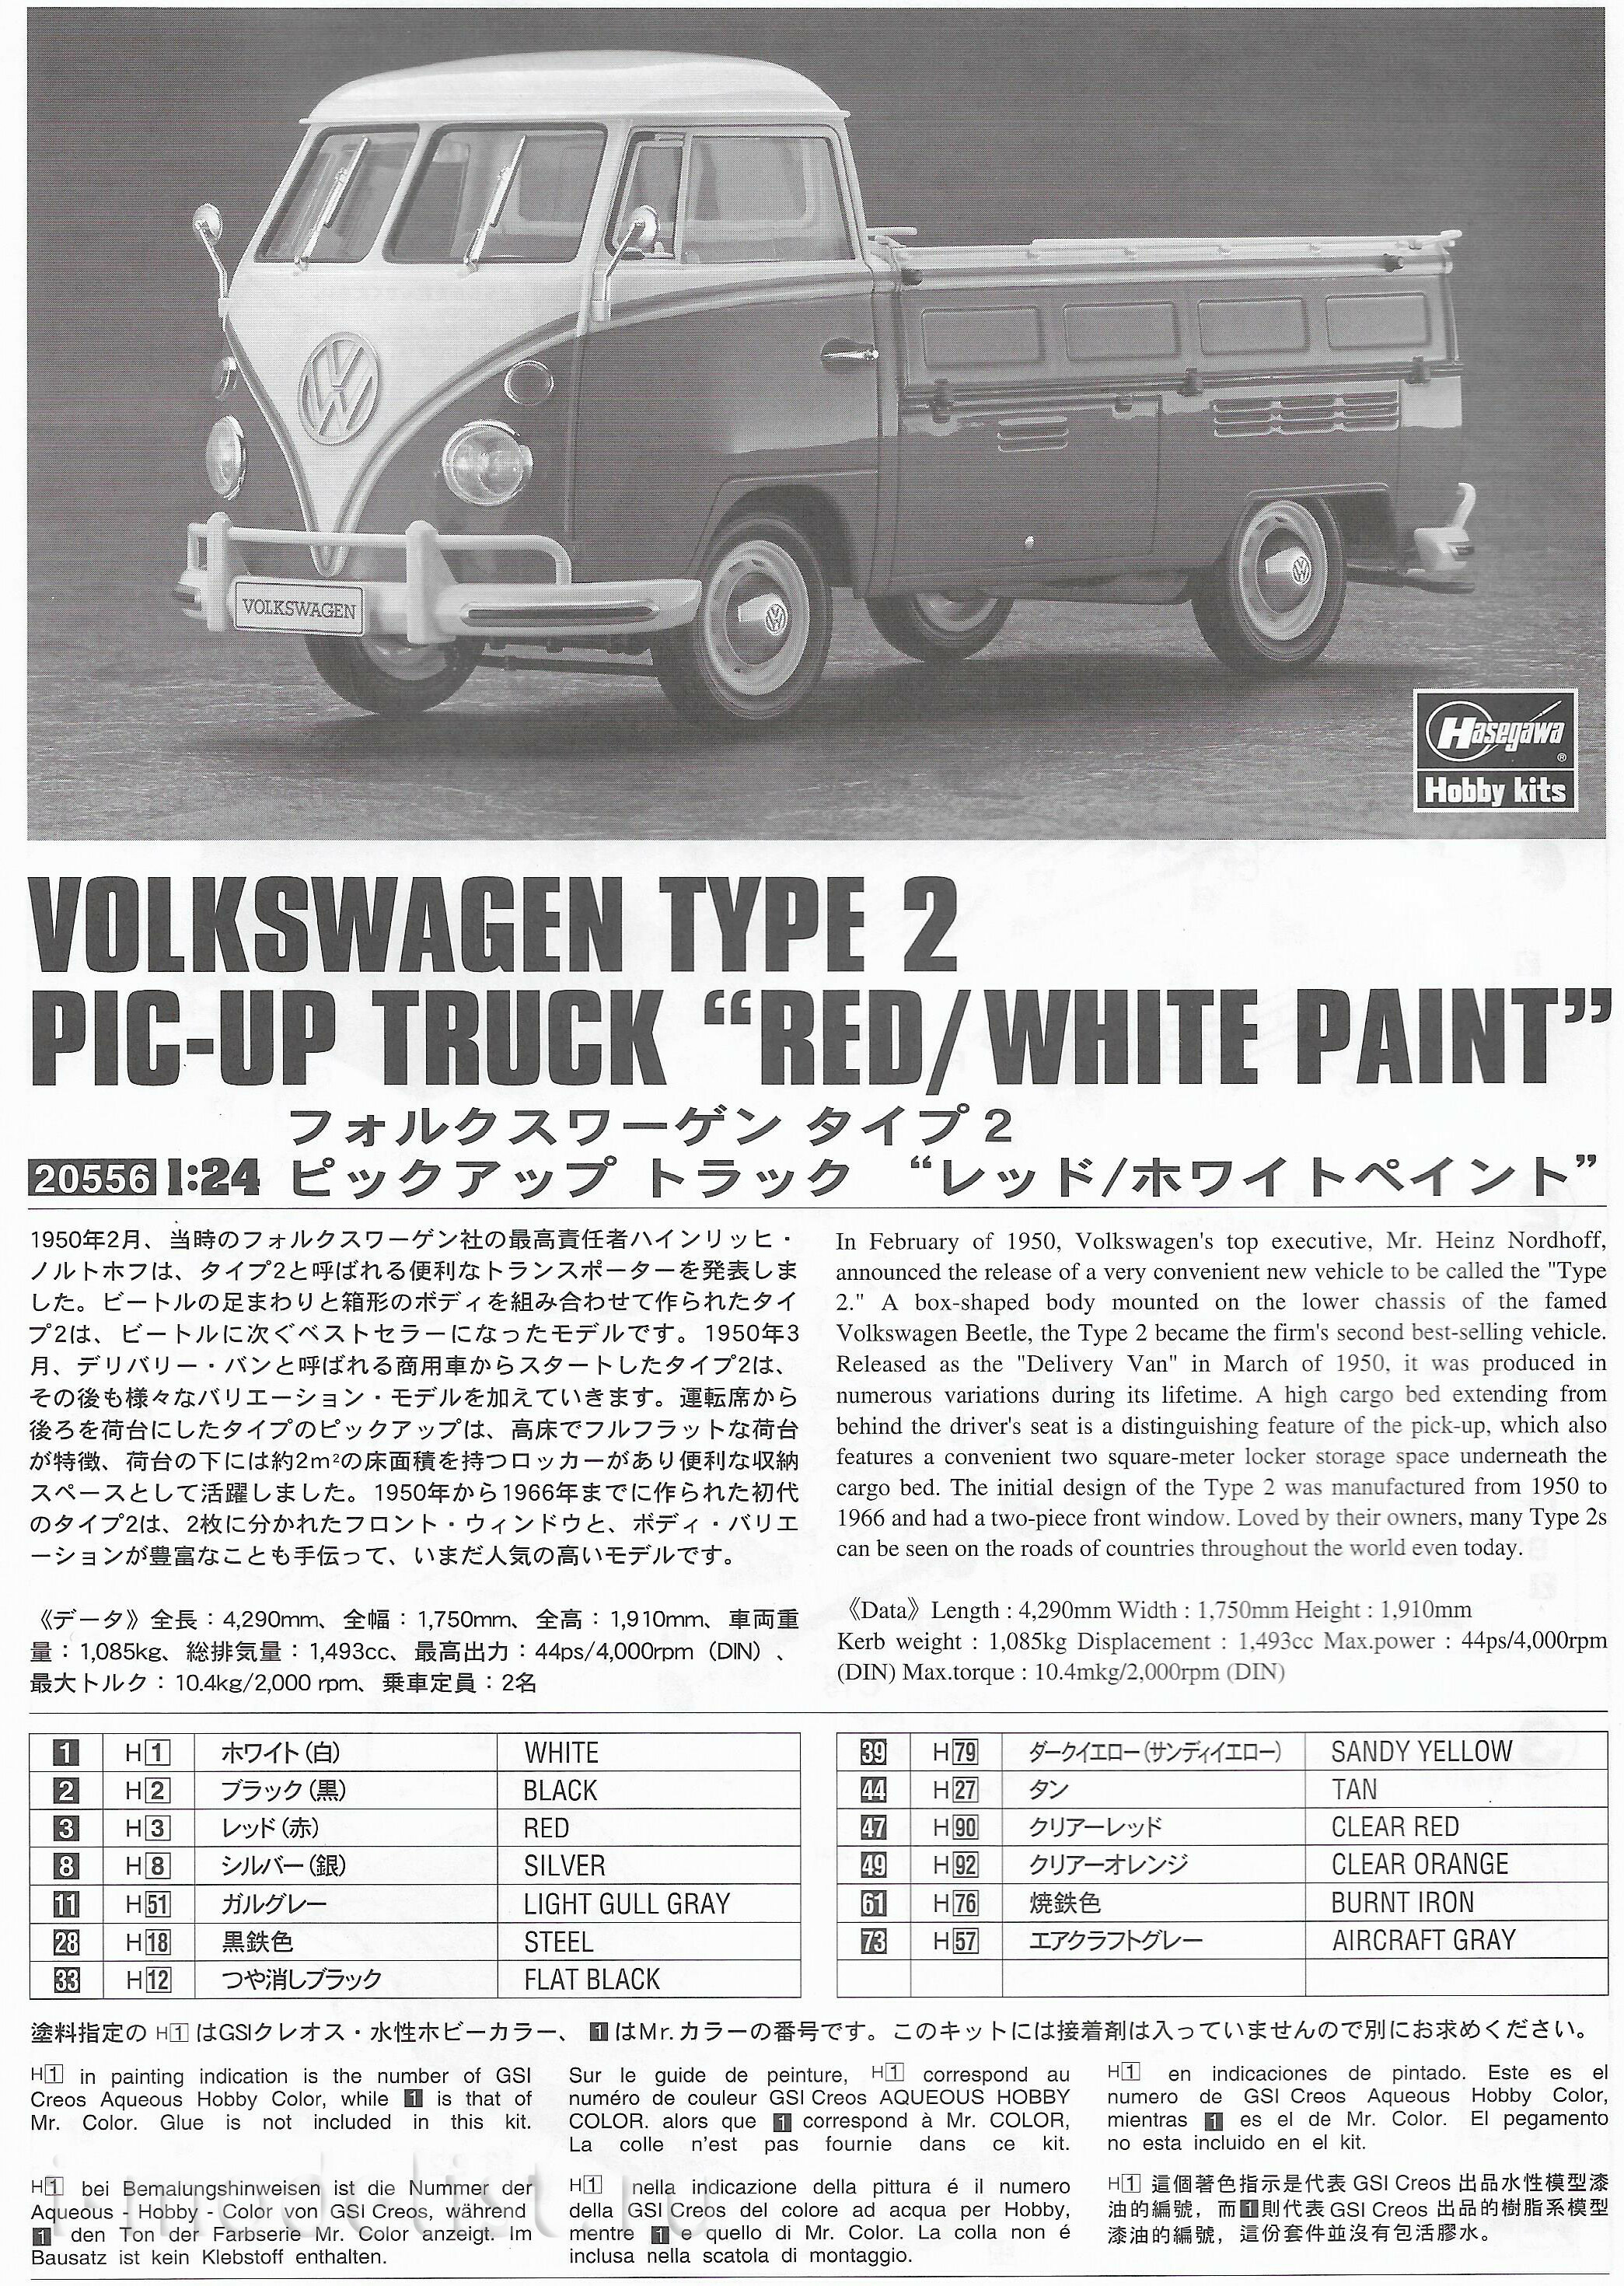 20556 Hasegawa 1/24 Автомобиль Volkswagen Type 2 Pic-up Truck 